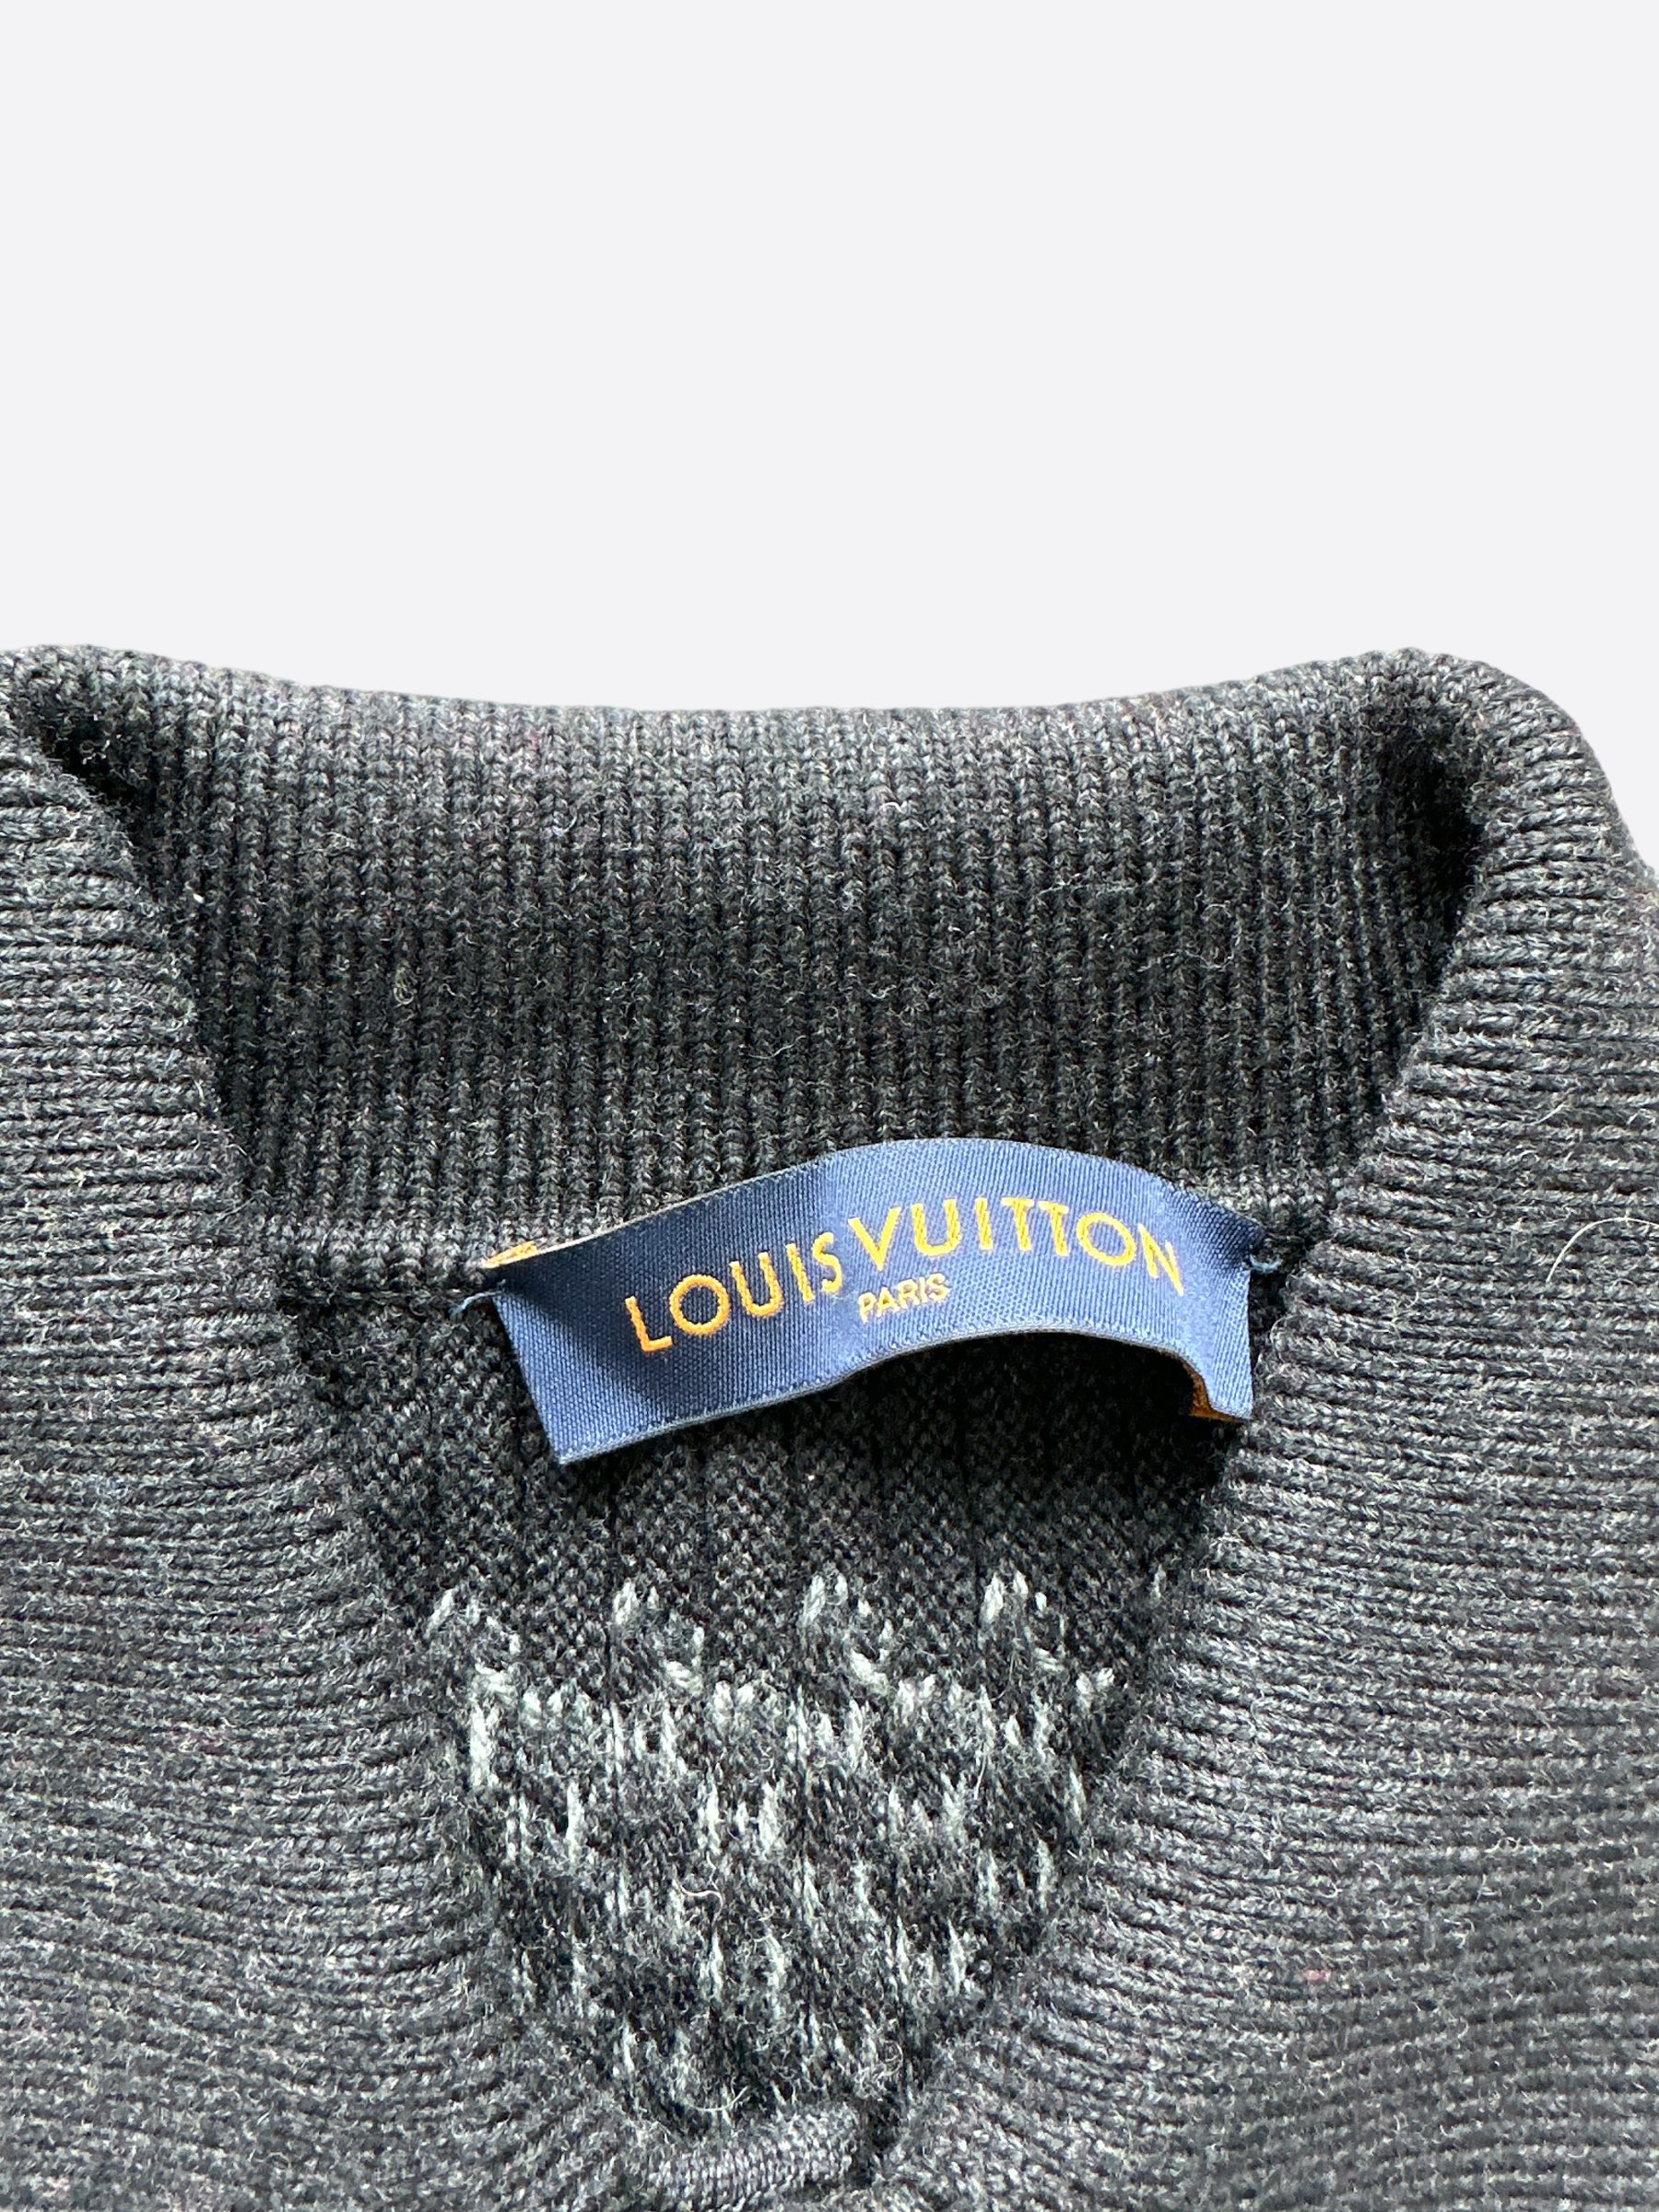 Cardigan lv  Louis vuitton sweater, Cardigan, Sweaters for women